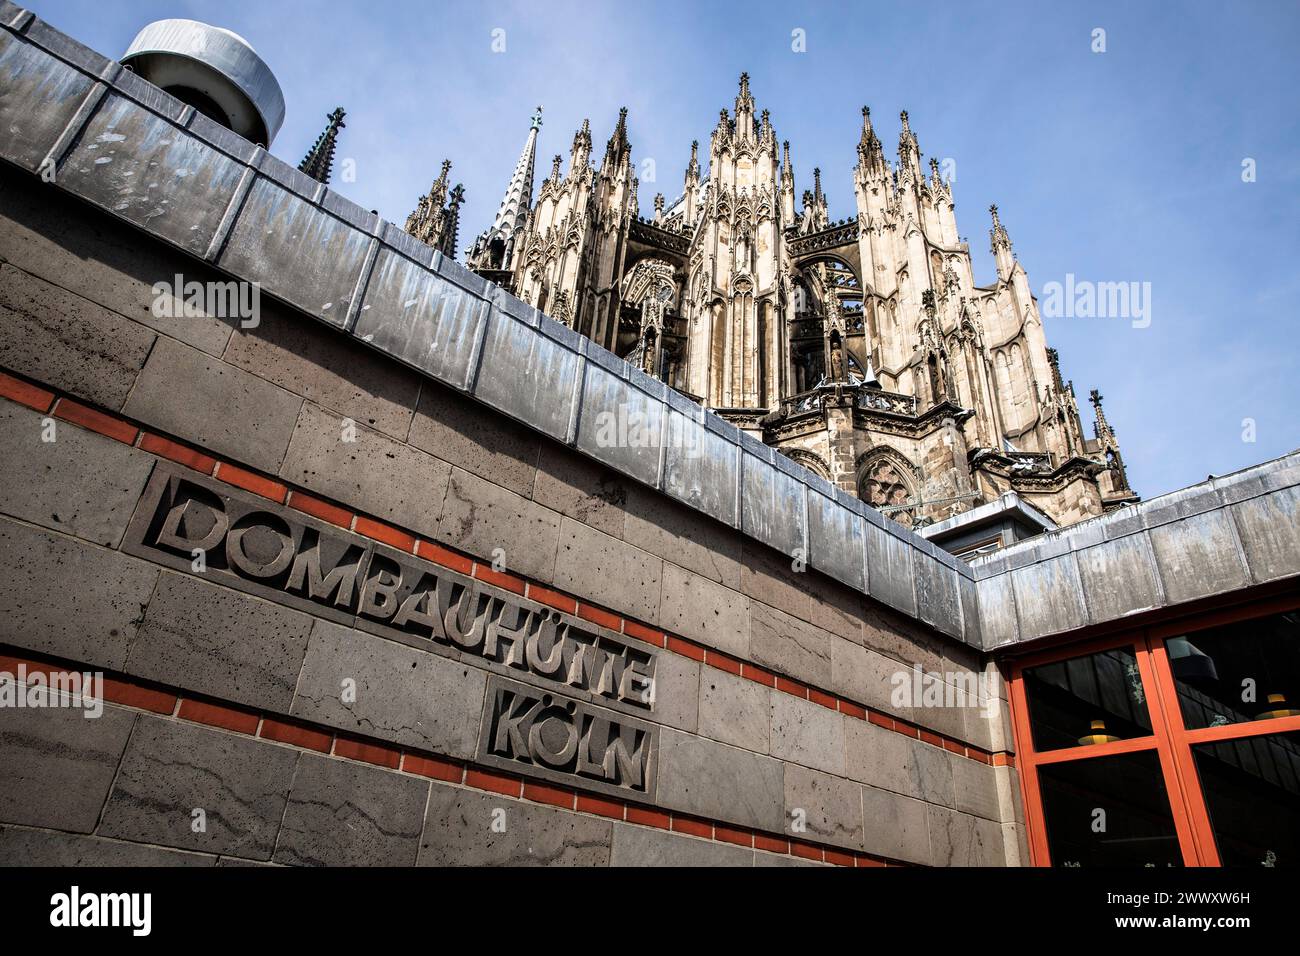 Ingresso al capanno della cattedrale, Colonia, Germania. Eingang zur Dommbauhuette, Koeln, Deutschland. Foto Stock